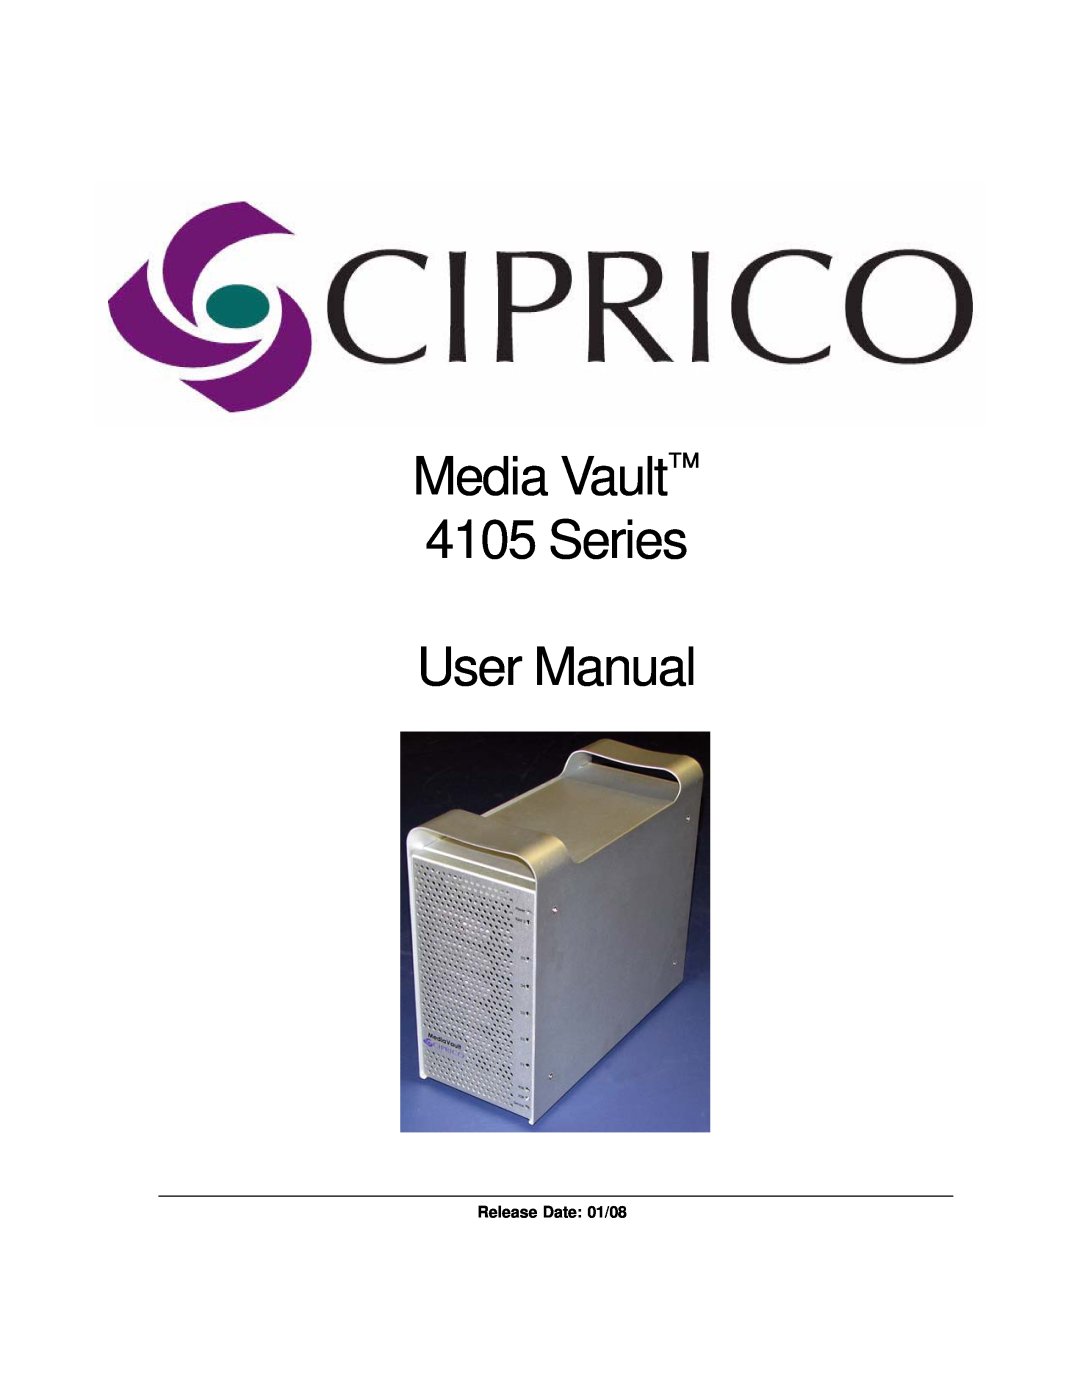 Ciprico user manual User Manual, Media Vault 4105 Series 